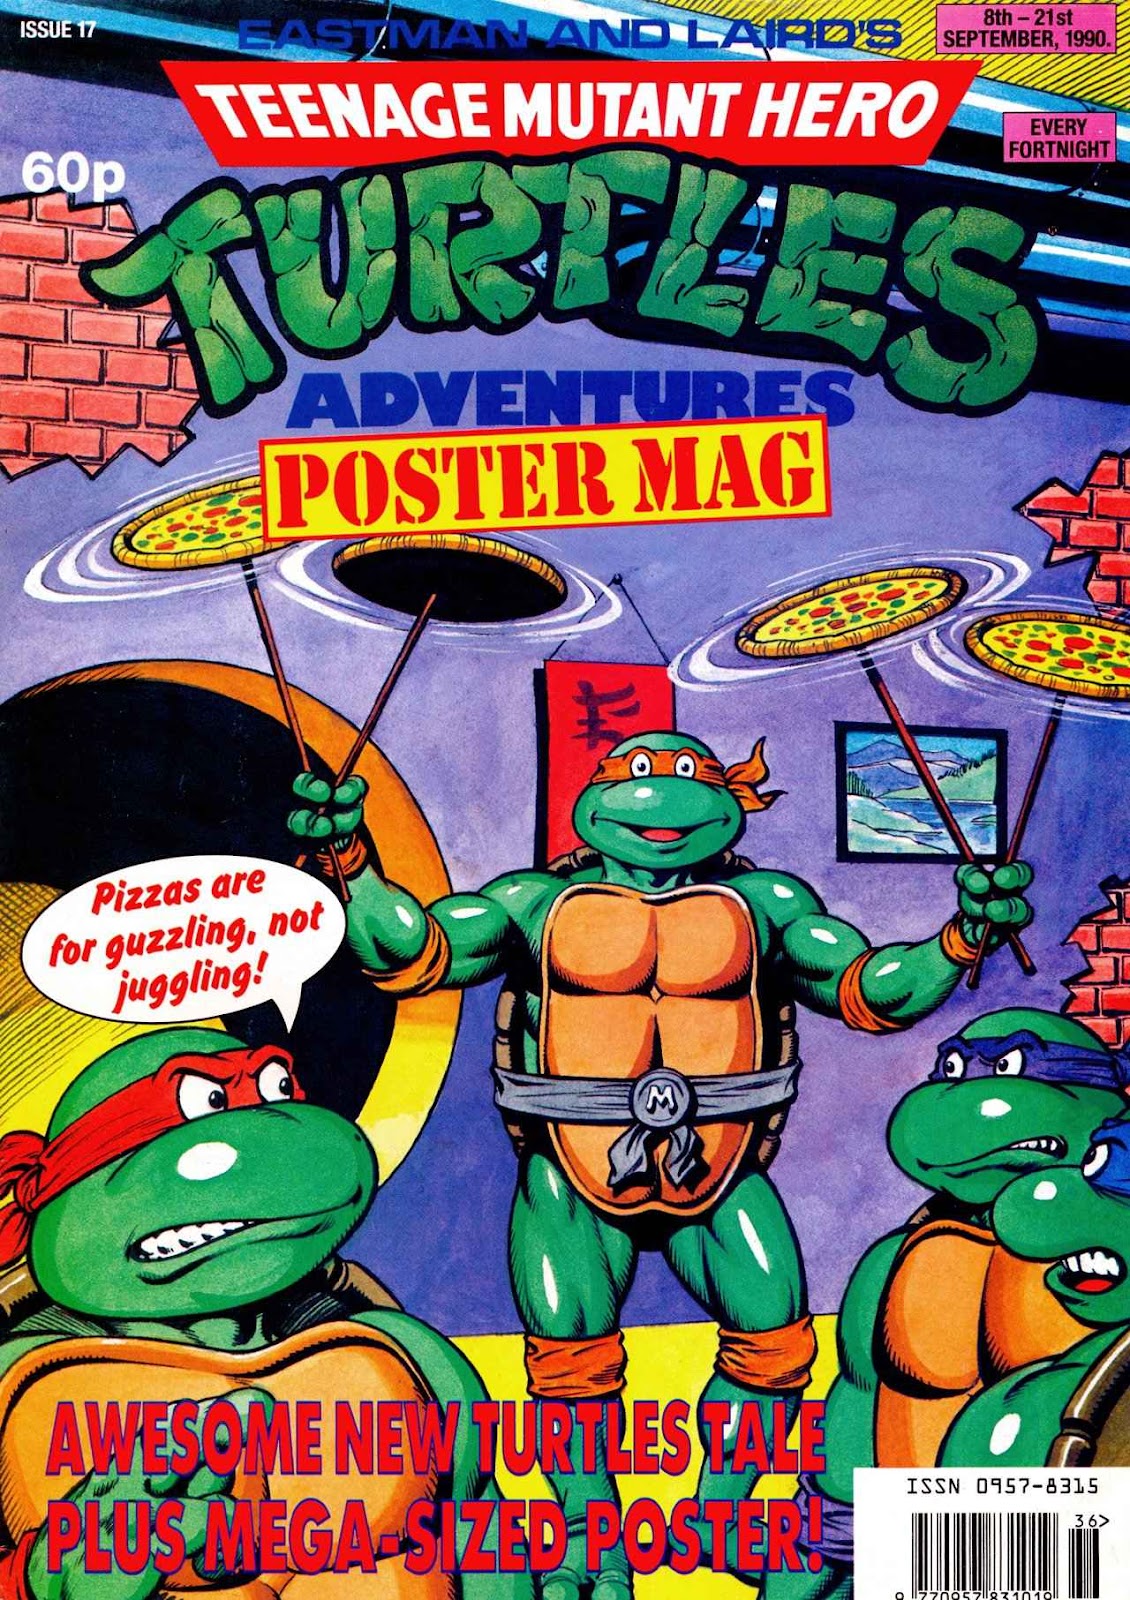 Teenage Mutant Hero Turtles Adventures issue 17 - Page 1